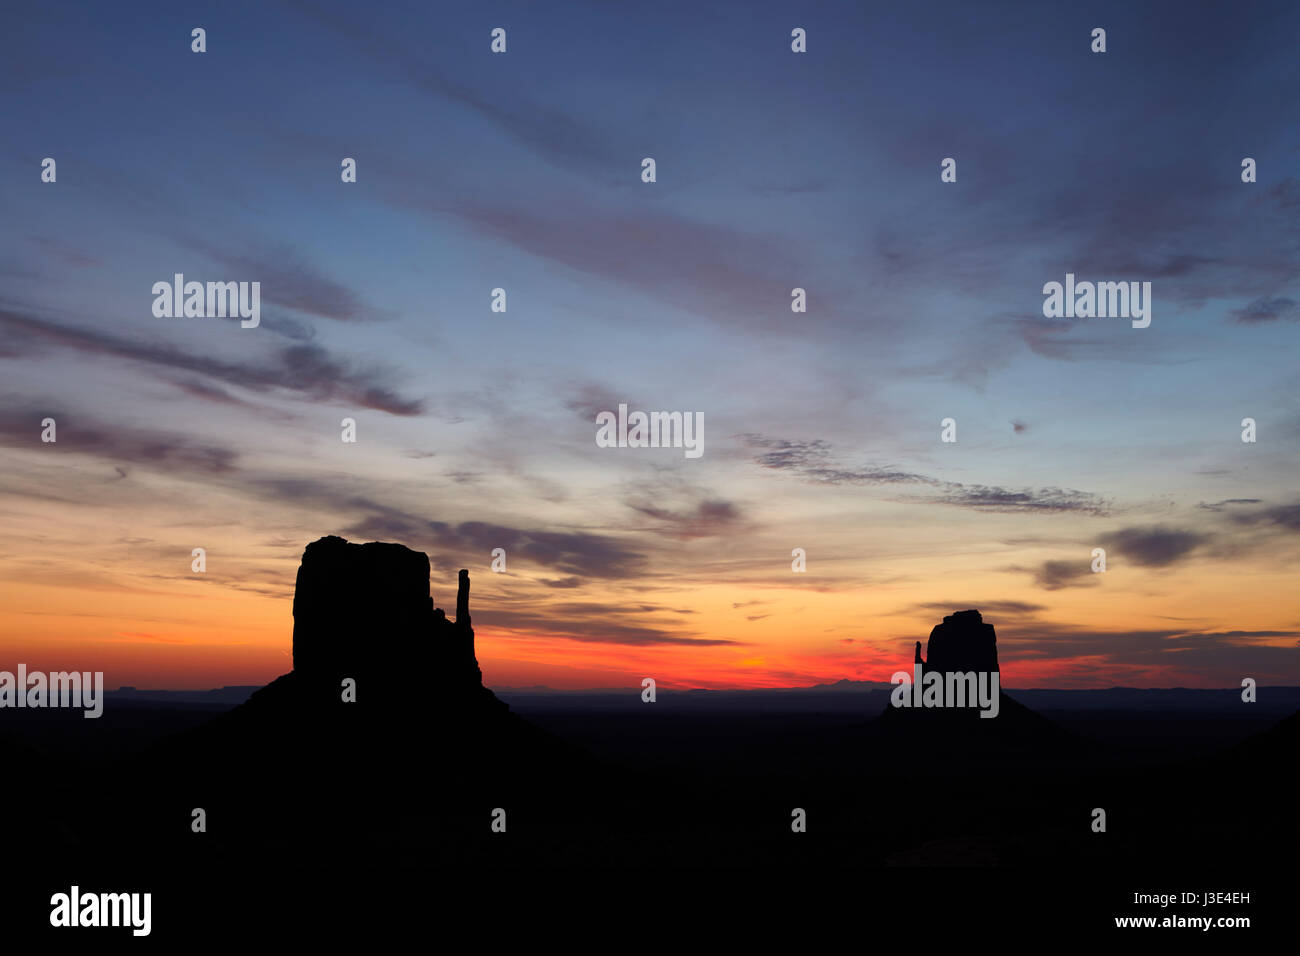 Sonnenaufgang am Monument Valley, Arizona, Vereinigte Staaten Stockfoto